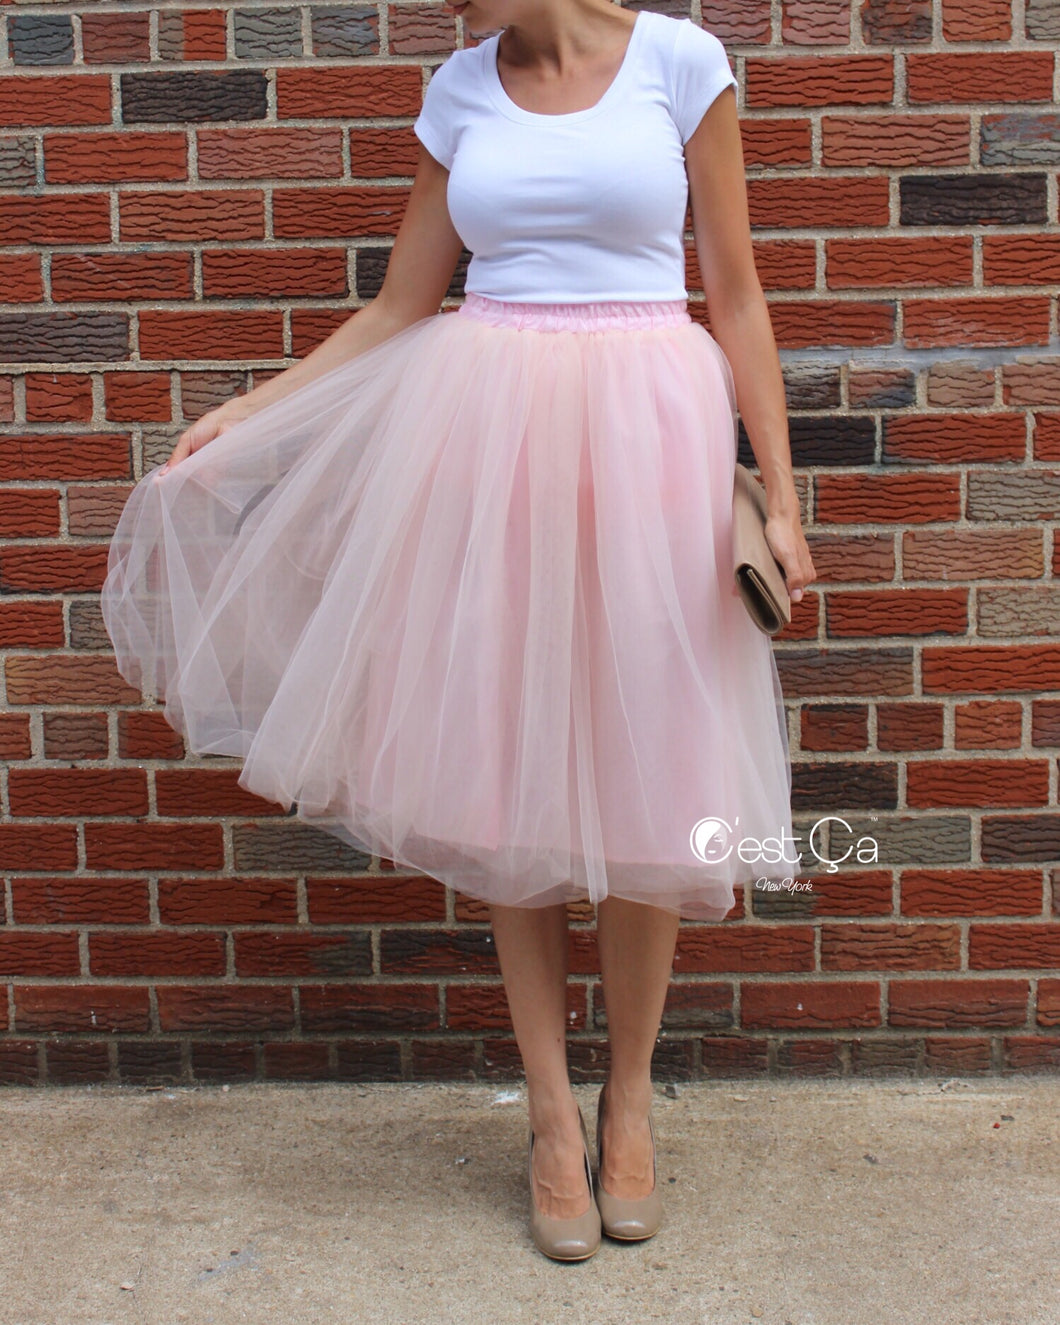 Claire Blush Pink Soft Tulle Skirt - Below Knee Midi - C'est Ça New York